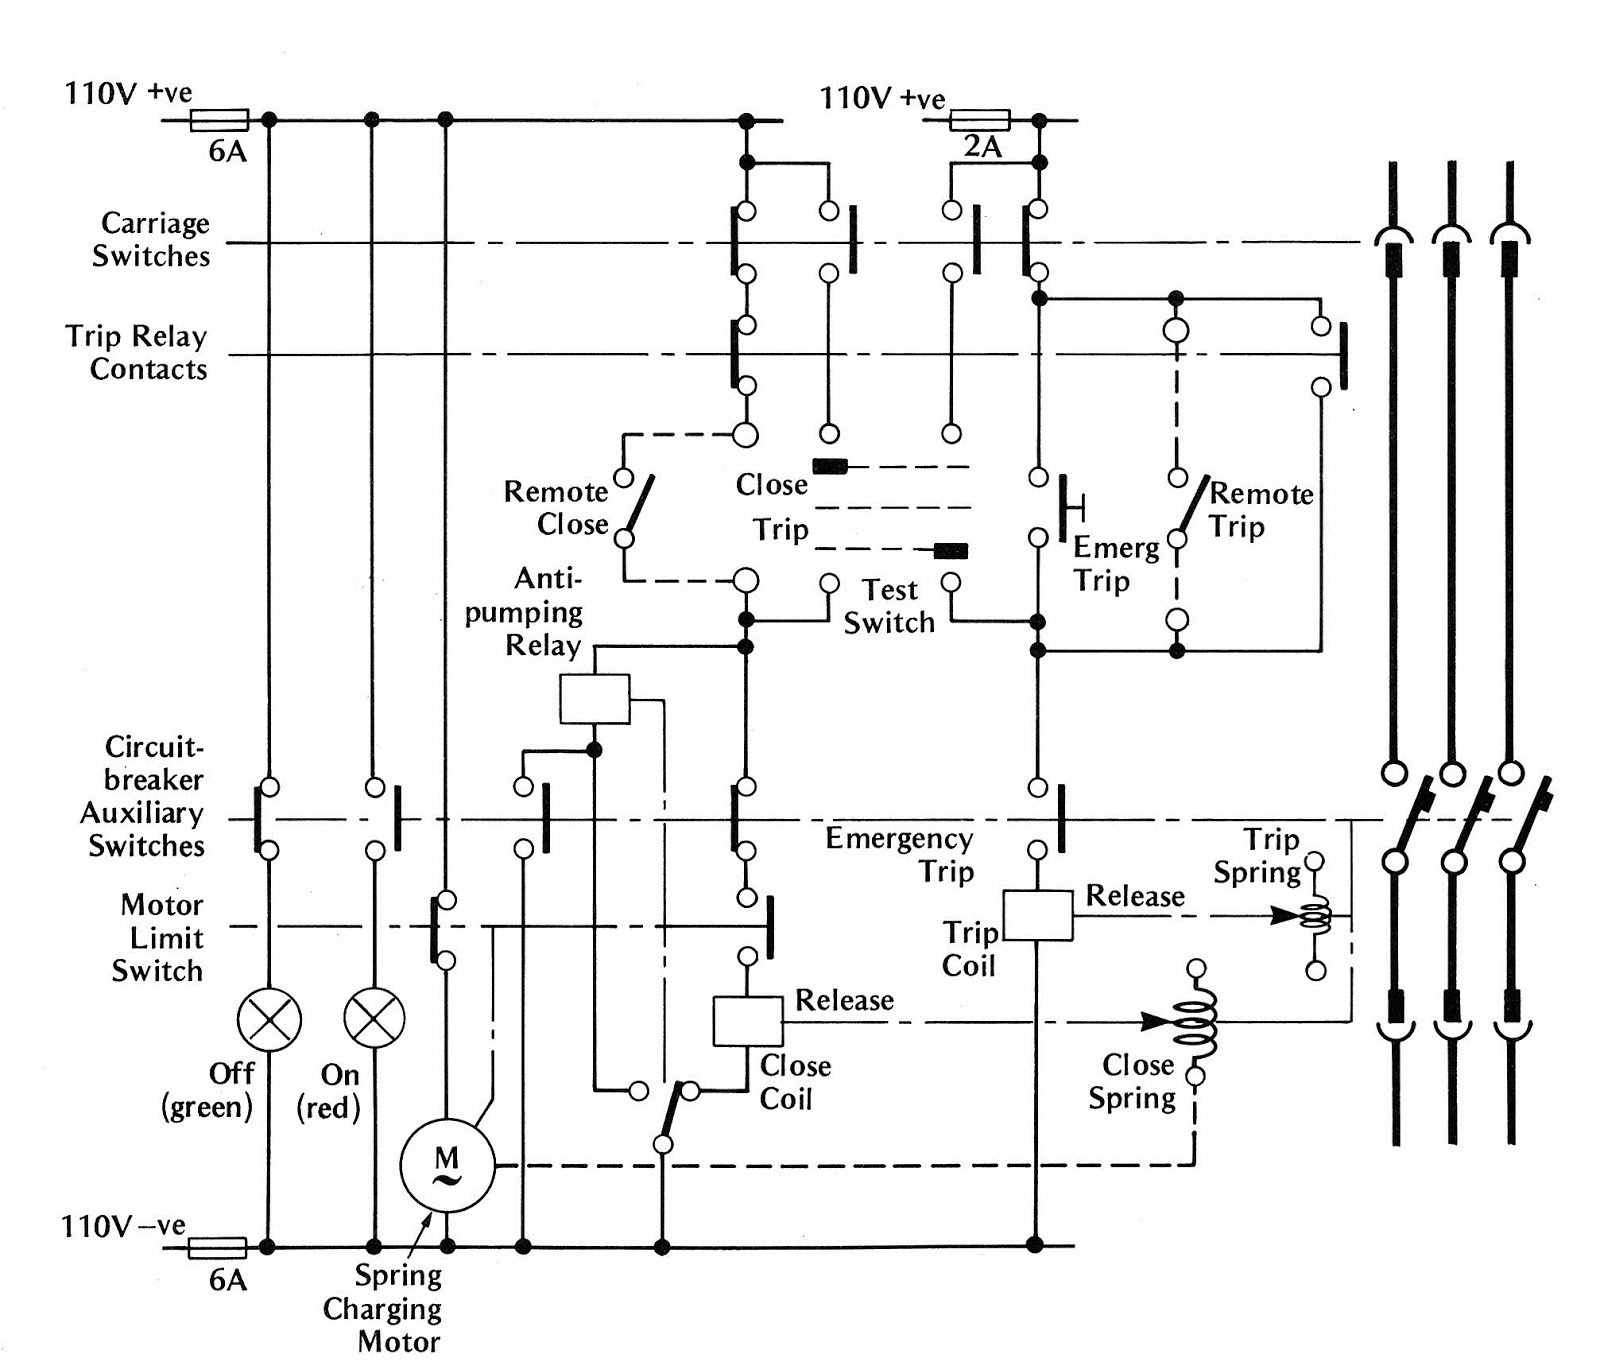 Allen-Bradley Motor Starter Wiring Diagram from detoxicrecenze.com